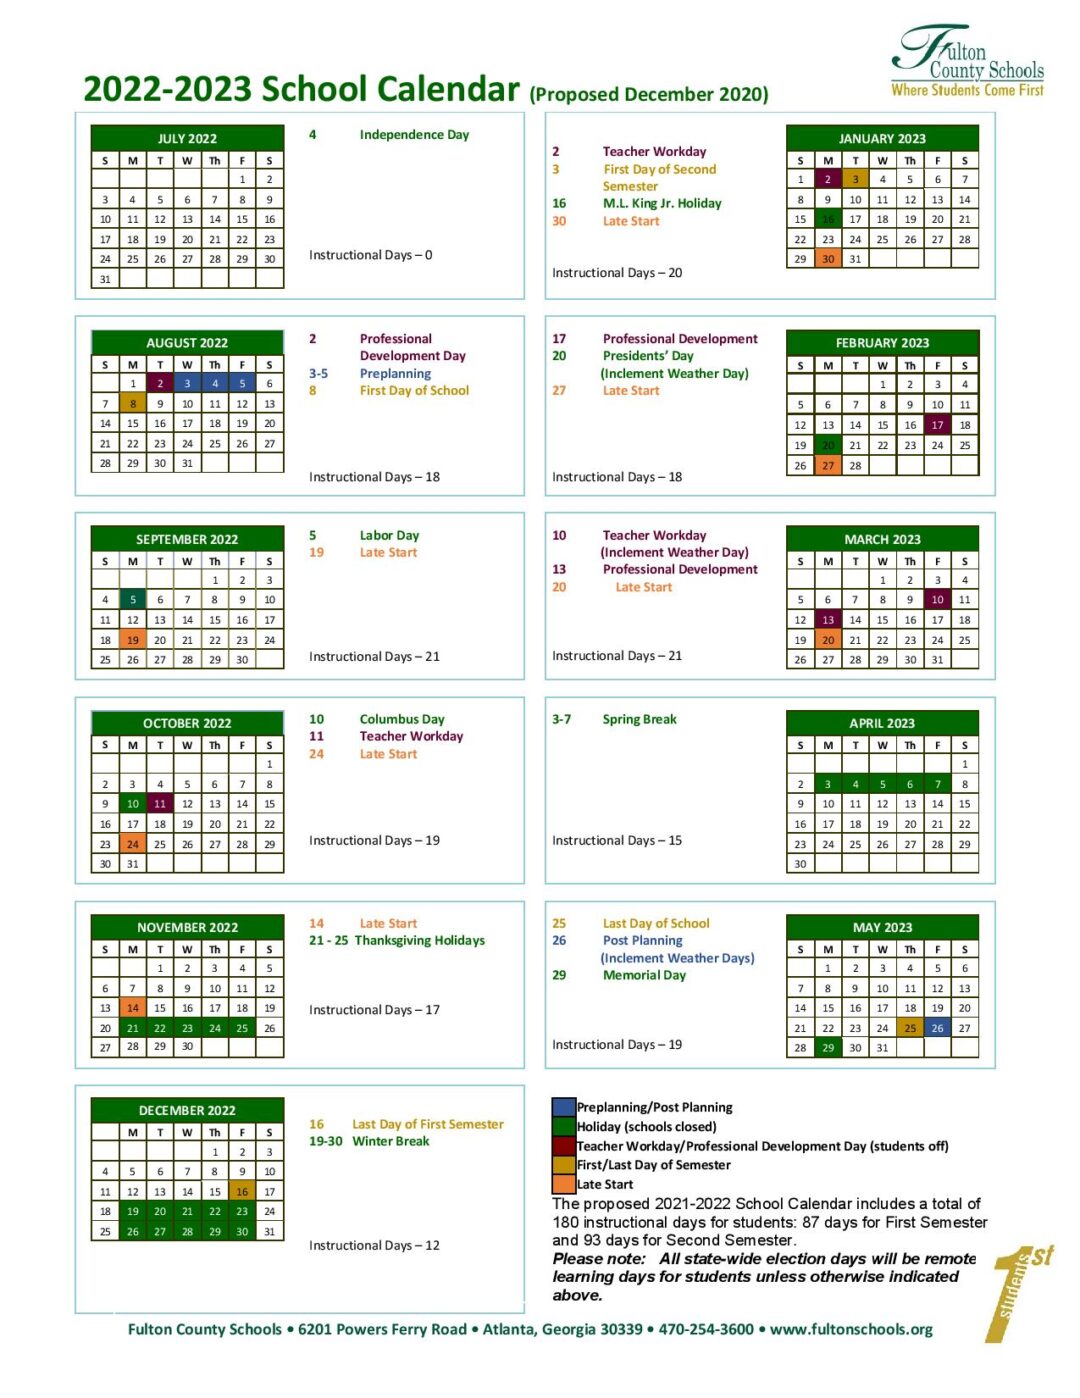 Fulton County School Calendar 20222023 in PDF